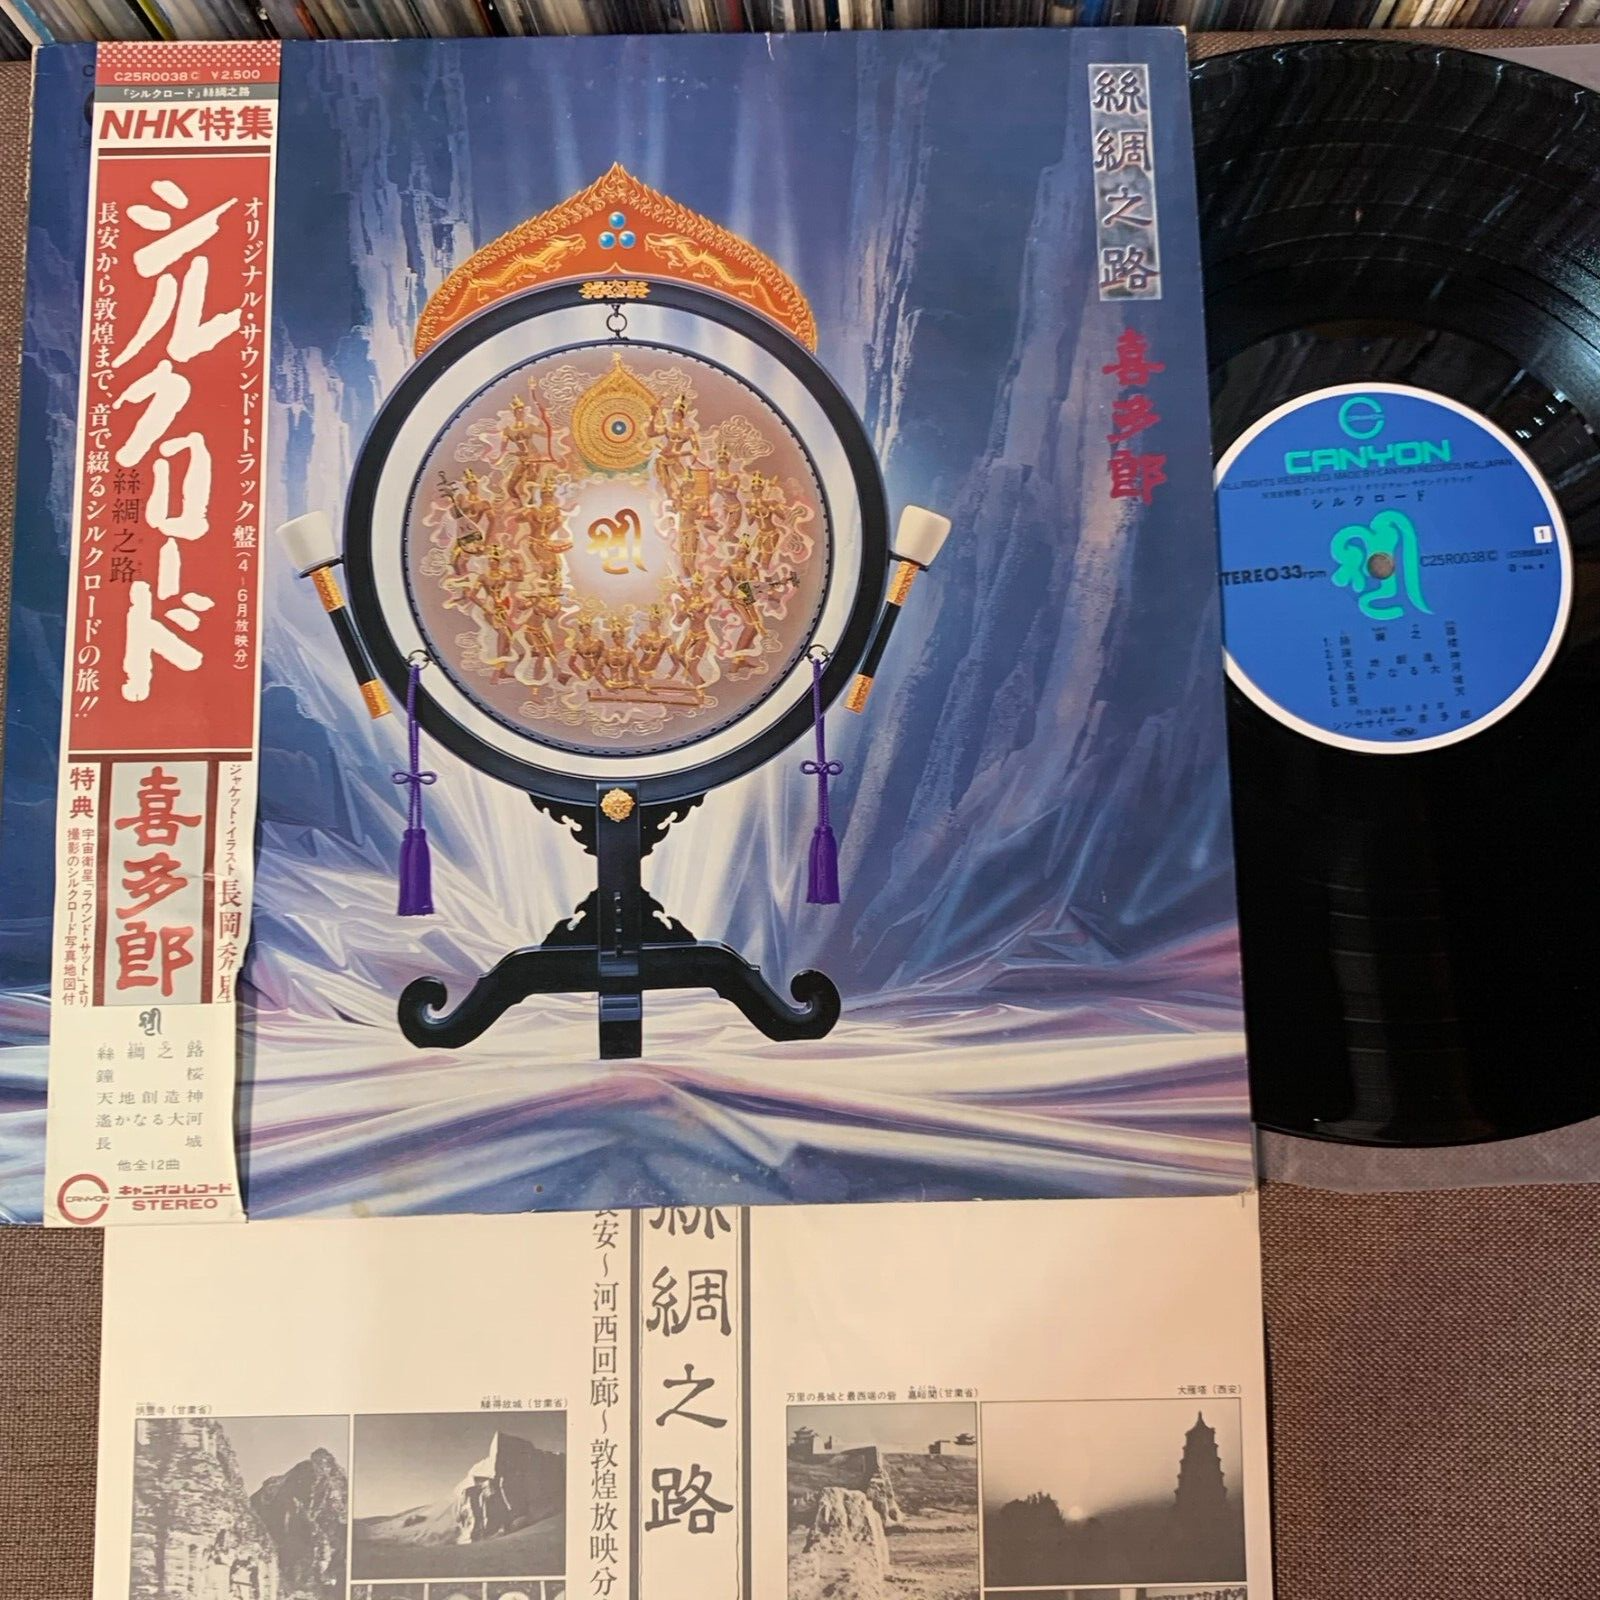 KITARO Silk Road JAPAN LP RECORD C25R0038 OBI + INSERT 1980 issue Shusei  Nagaoka | eBay